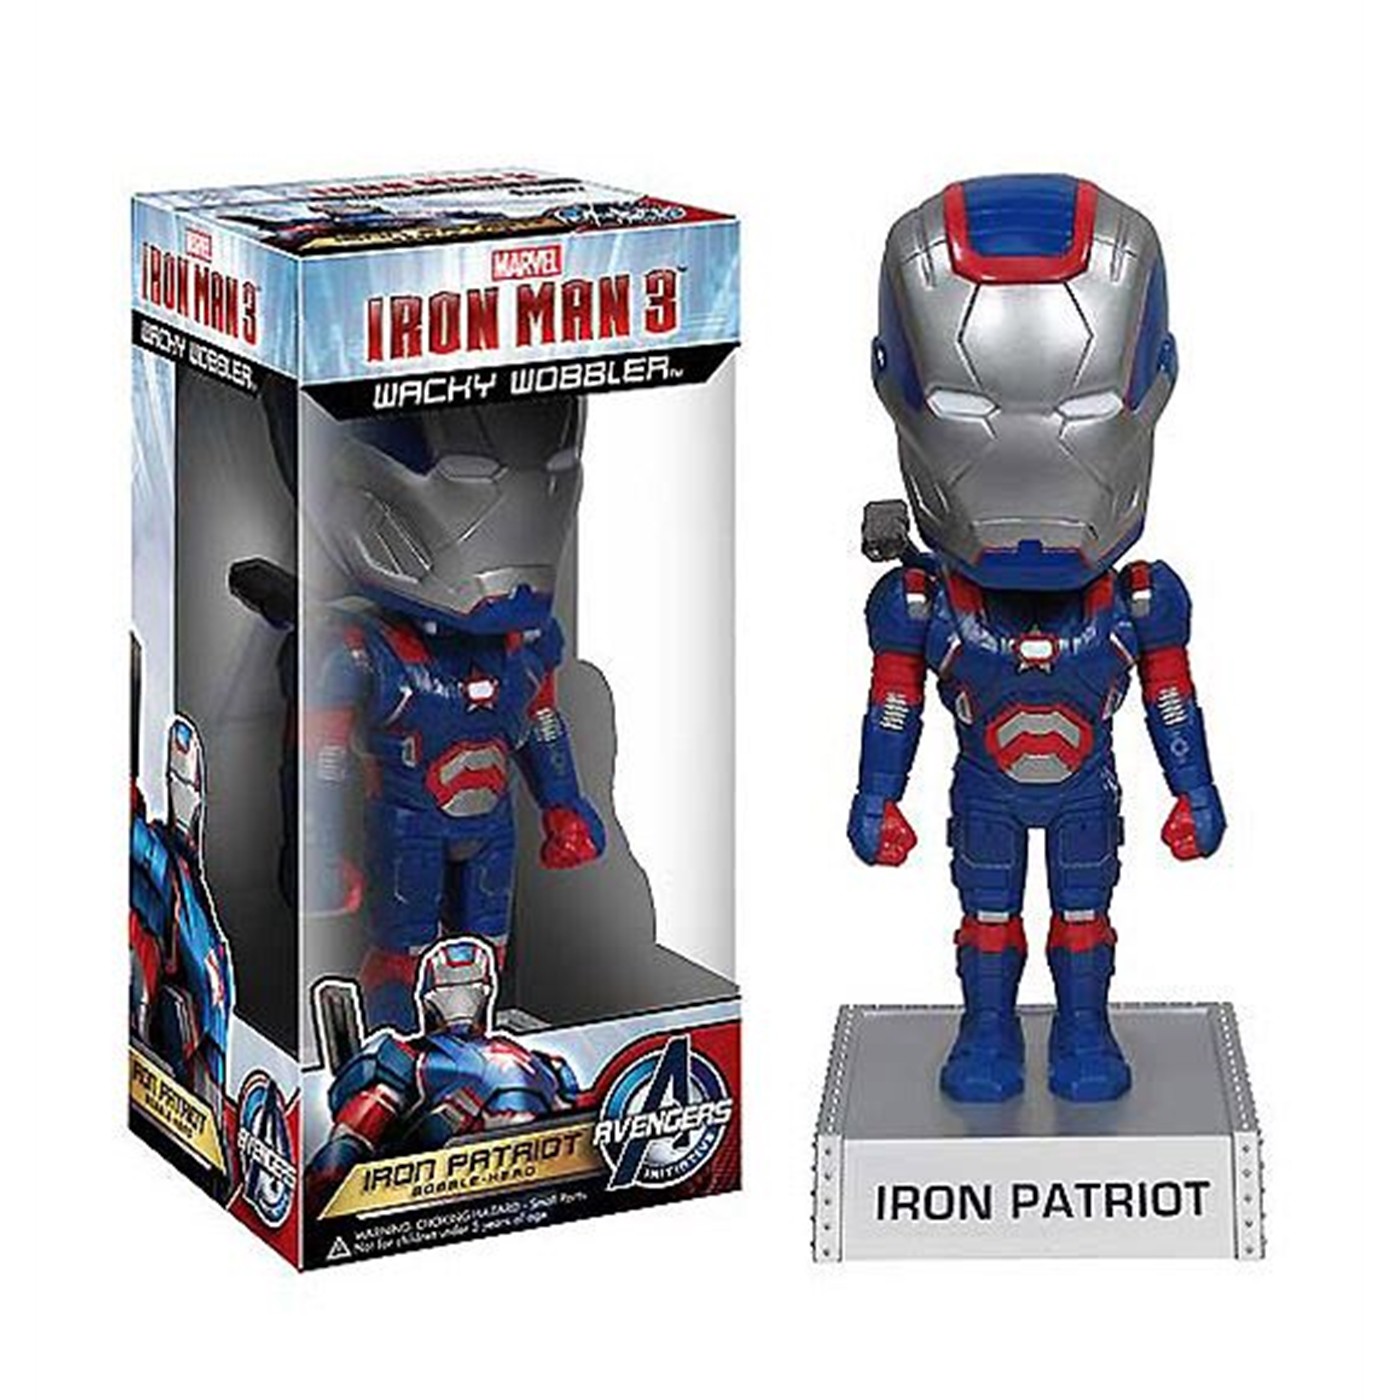 Iron Man 3 Iron Patriot Wacky Wobbler Bobblehead